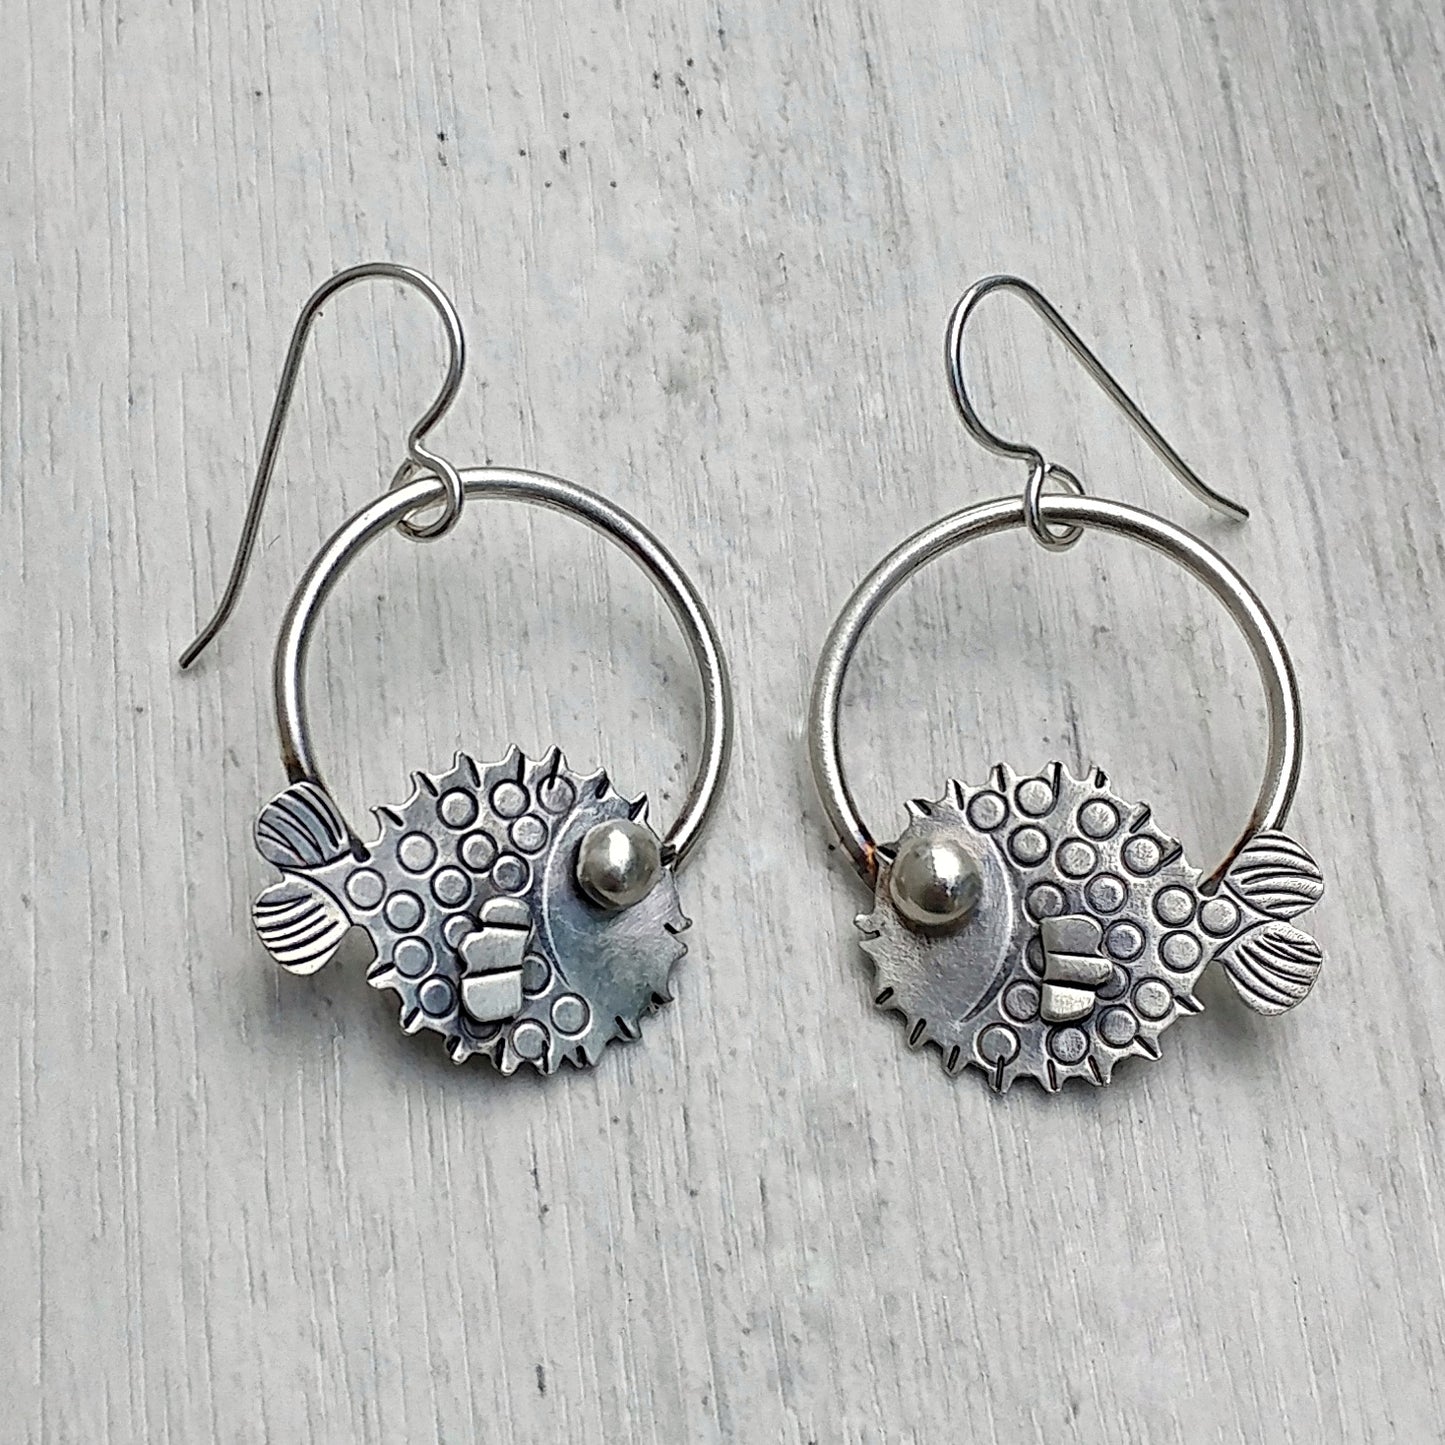 Sterling silver puffer fish earrings